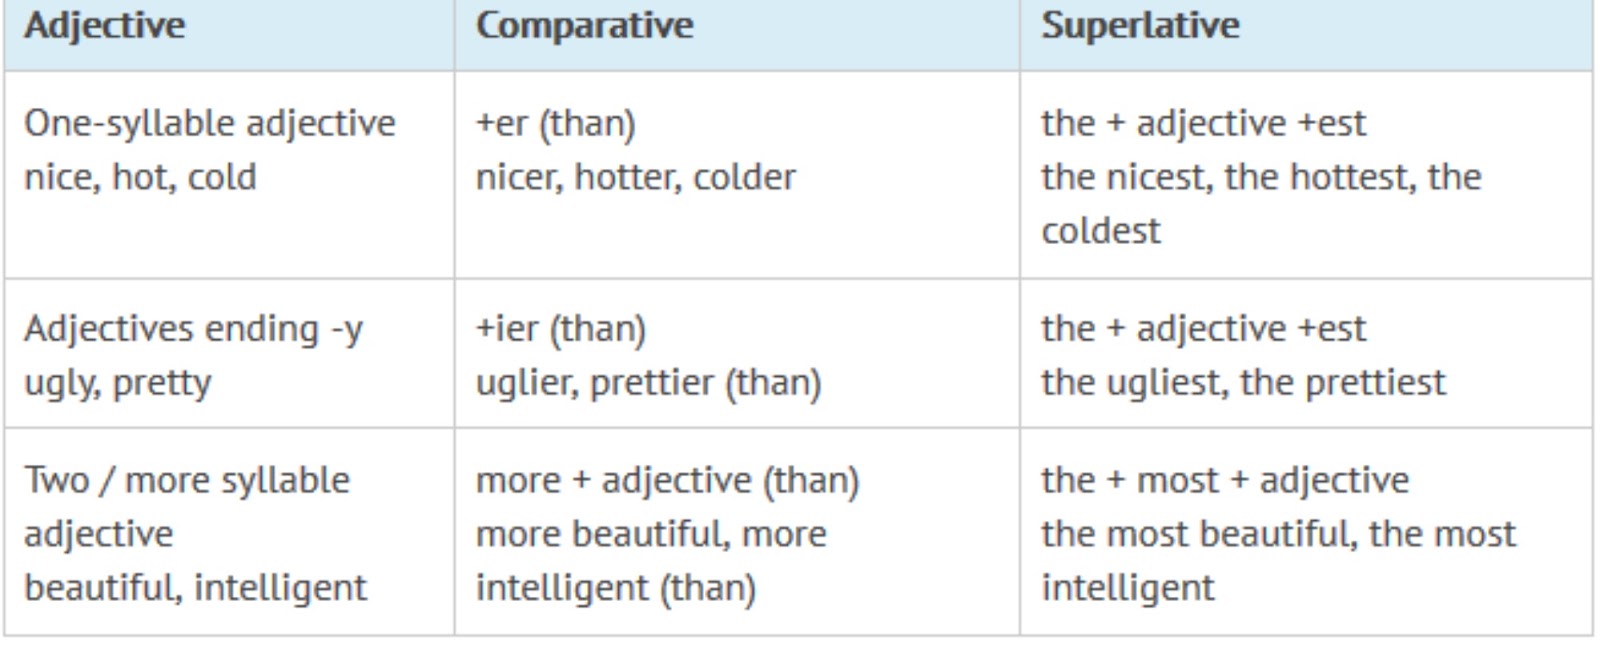 Comparative adjective перевод. Comparatives and Superlatives. Comparative and Superlative adjectives исключения. Грамматика Comparatives. Comparatives and Superlatives исключения.